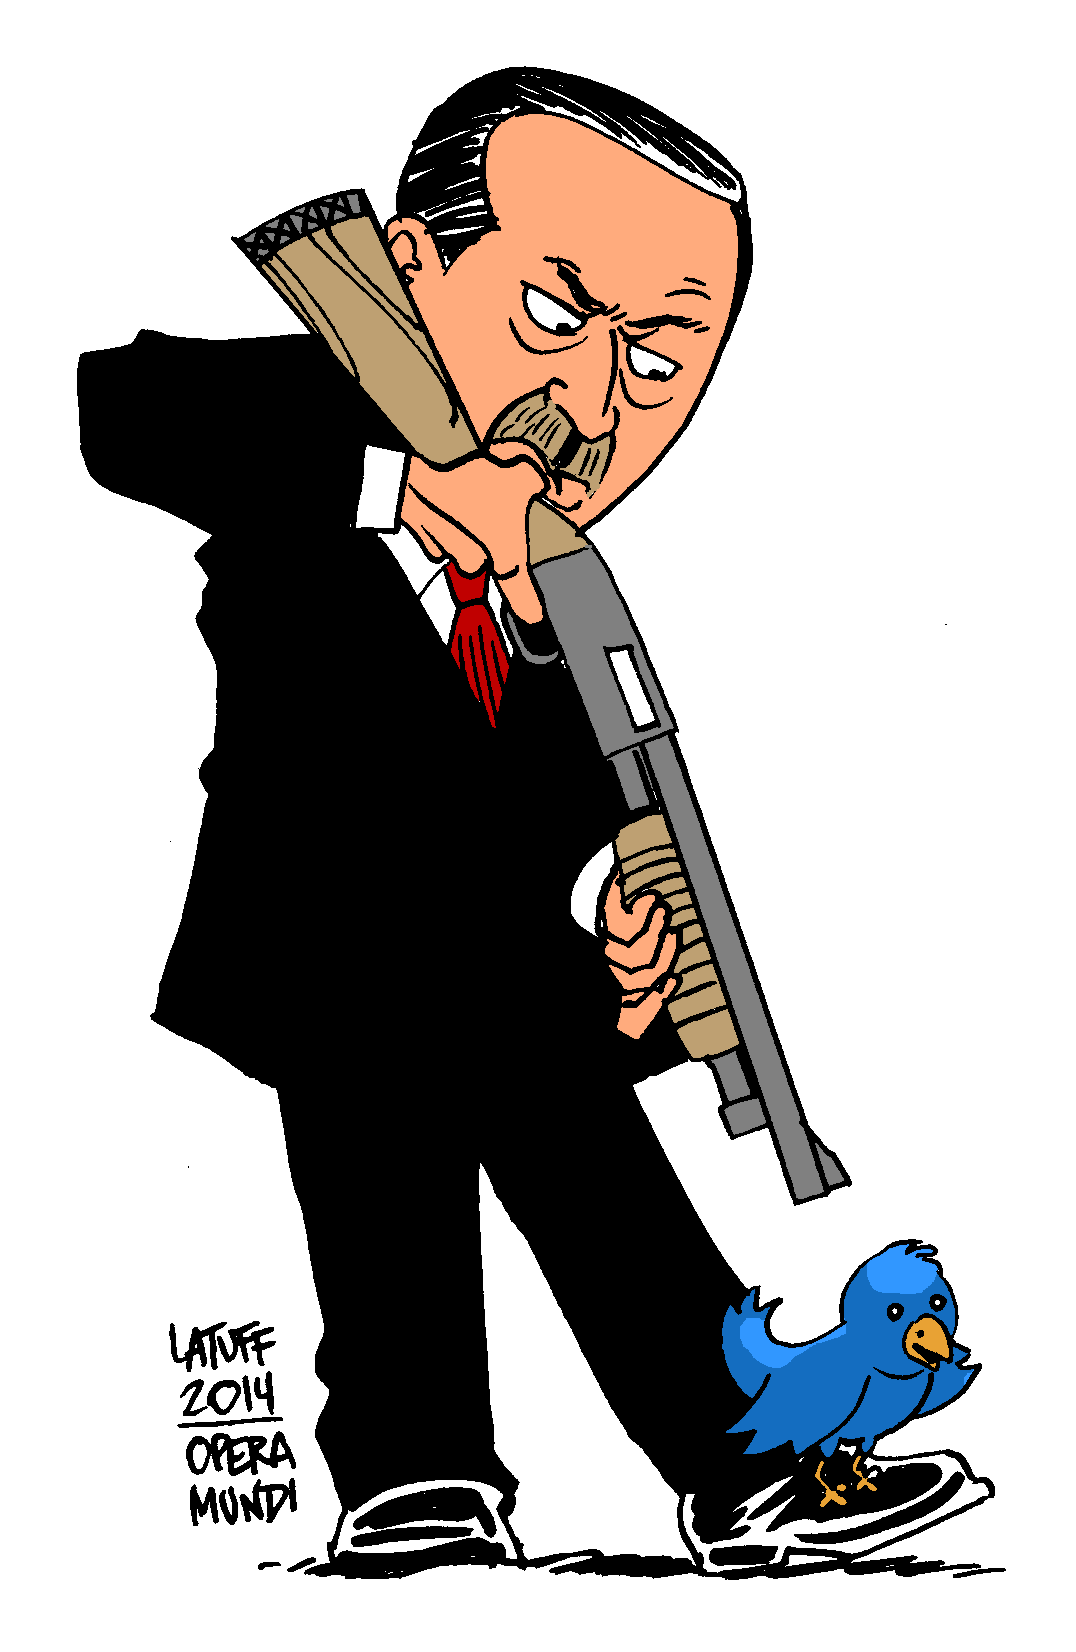 Censorship of @Twitter in Turkey: dumb move by Erdogan - Carlos Latuff